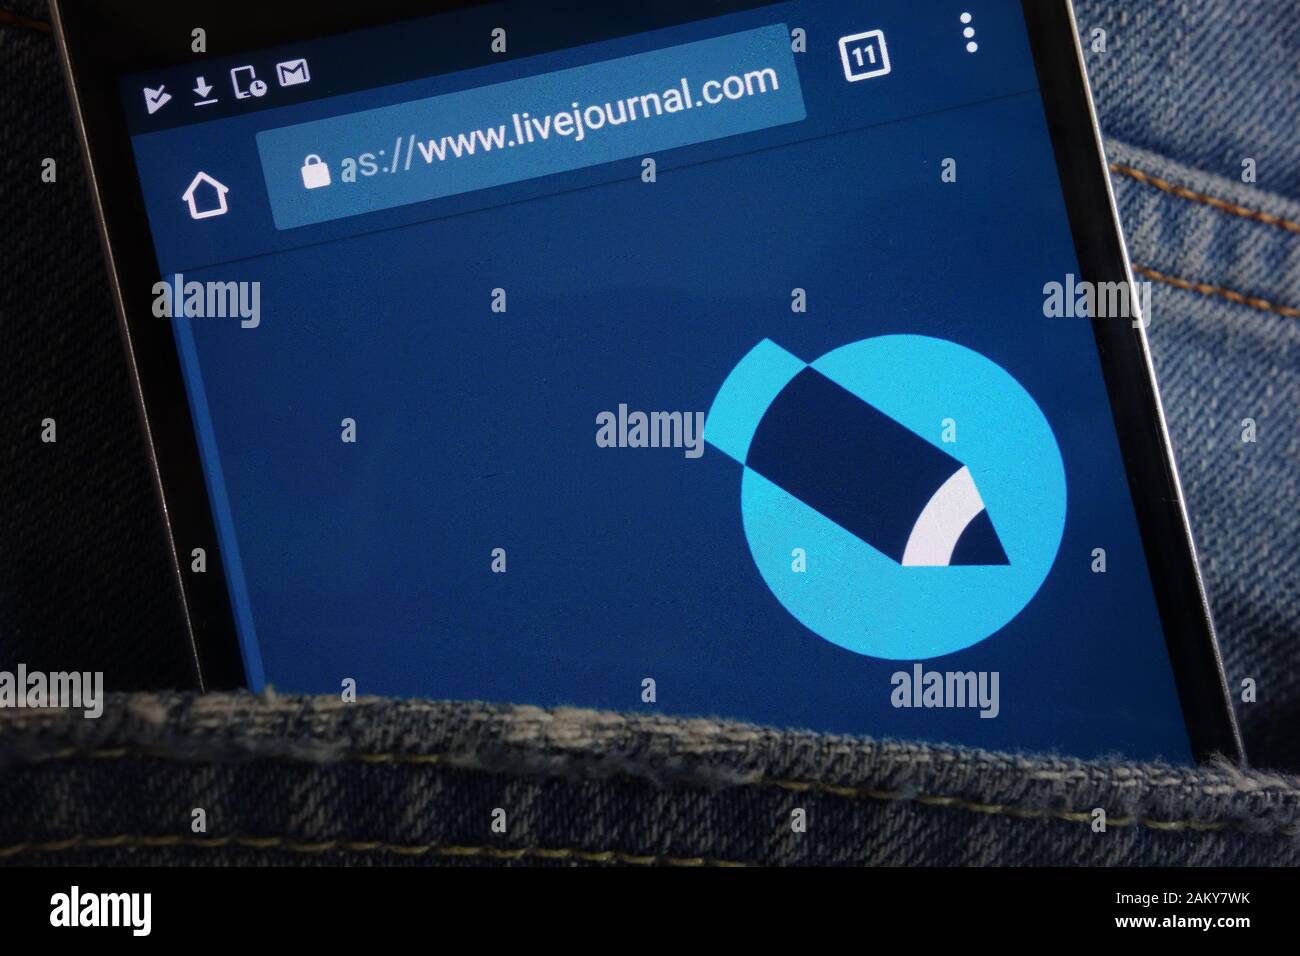 LiveJournal website displayed on smartphone hidden in jeans pocket Stock Photo